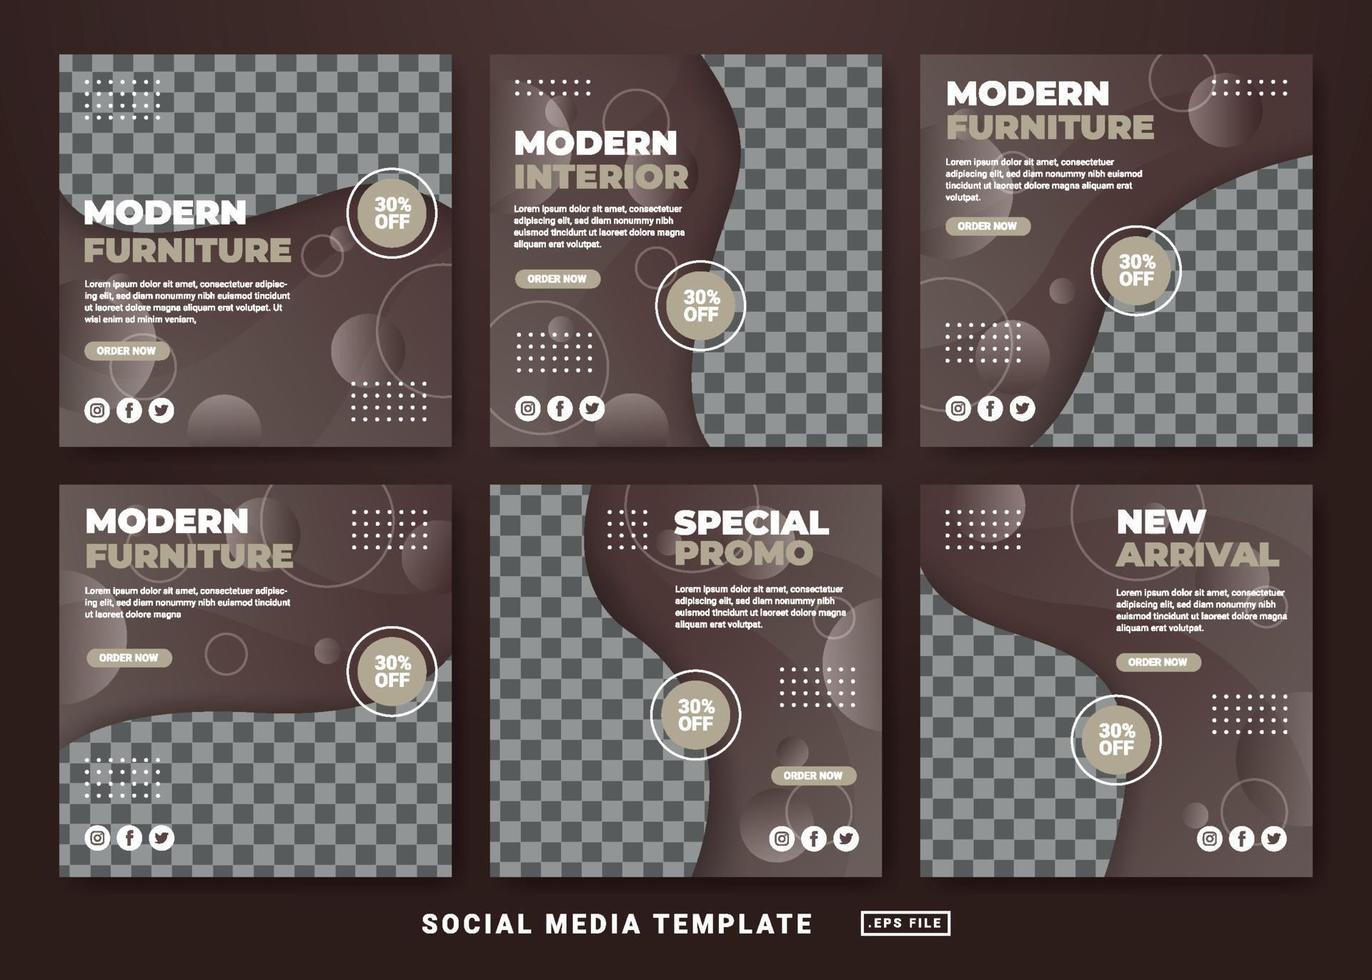 Flyer or social media post themed furniture sale template. Modern furniture banner vector